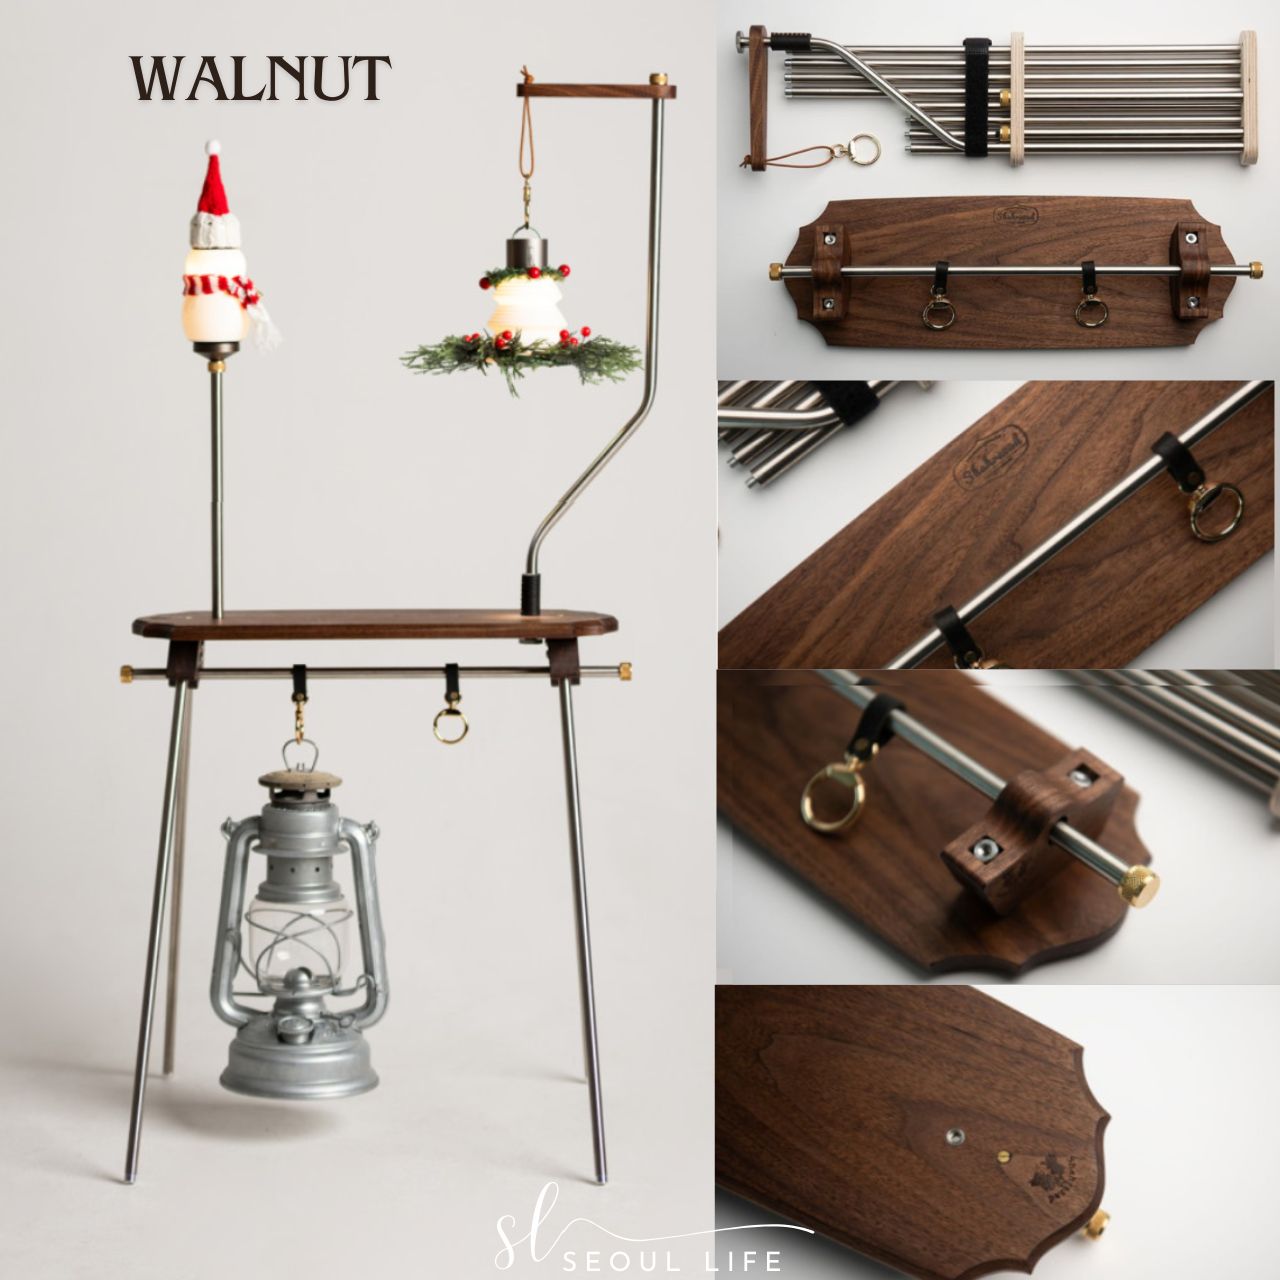 Premium Handcarft Wood lantern hanger stand/ Table/ Shelf, Made in Korea